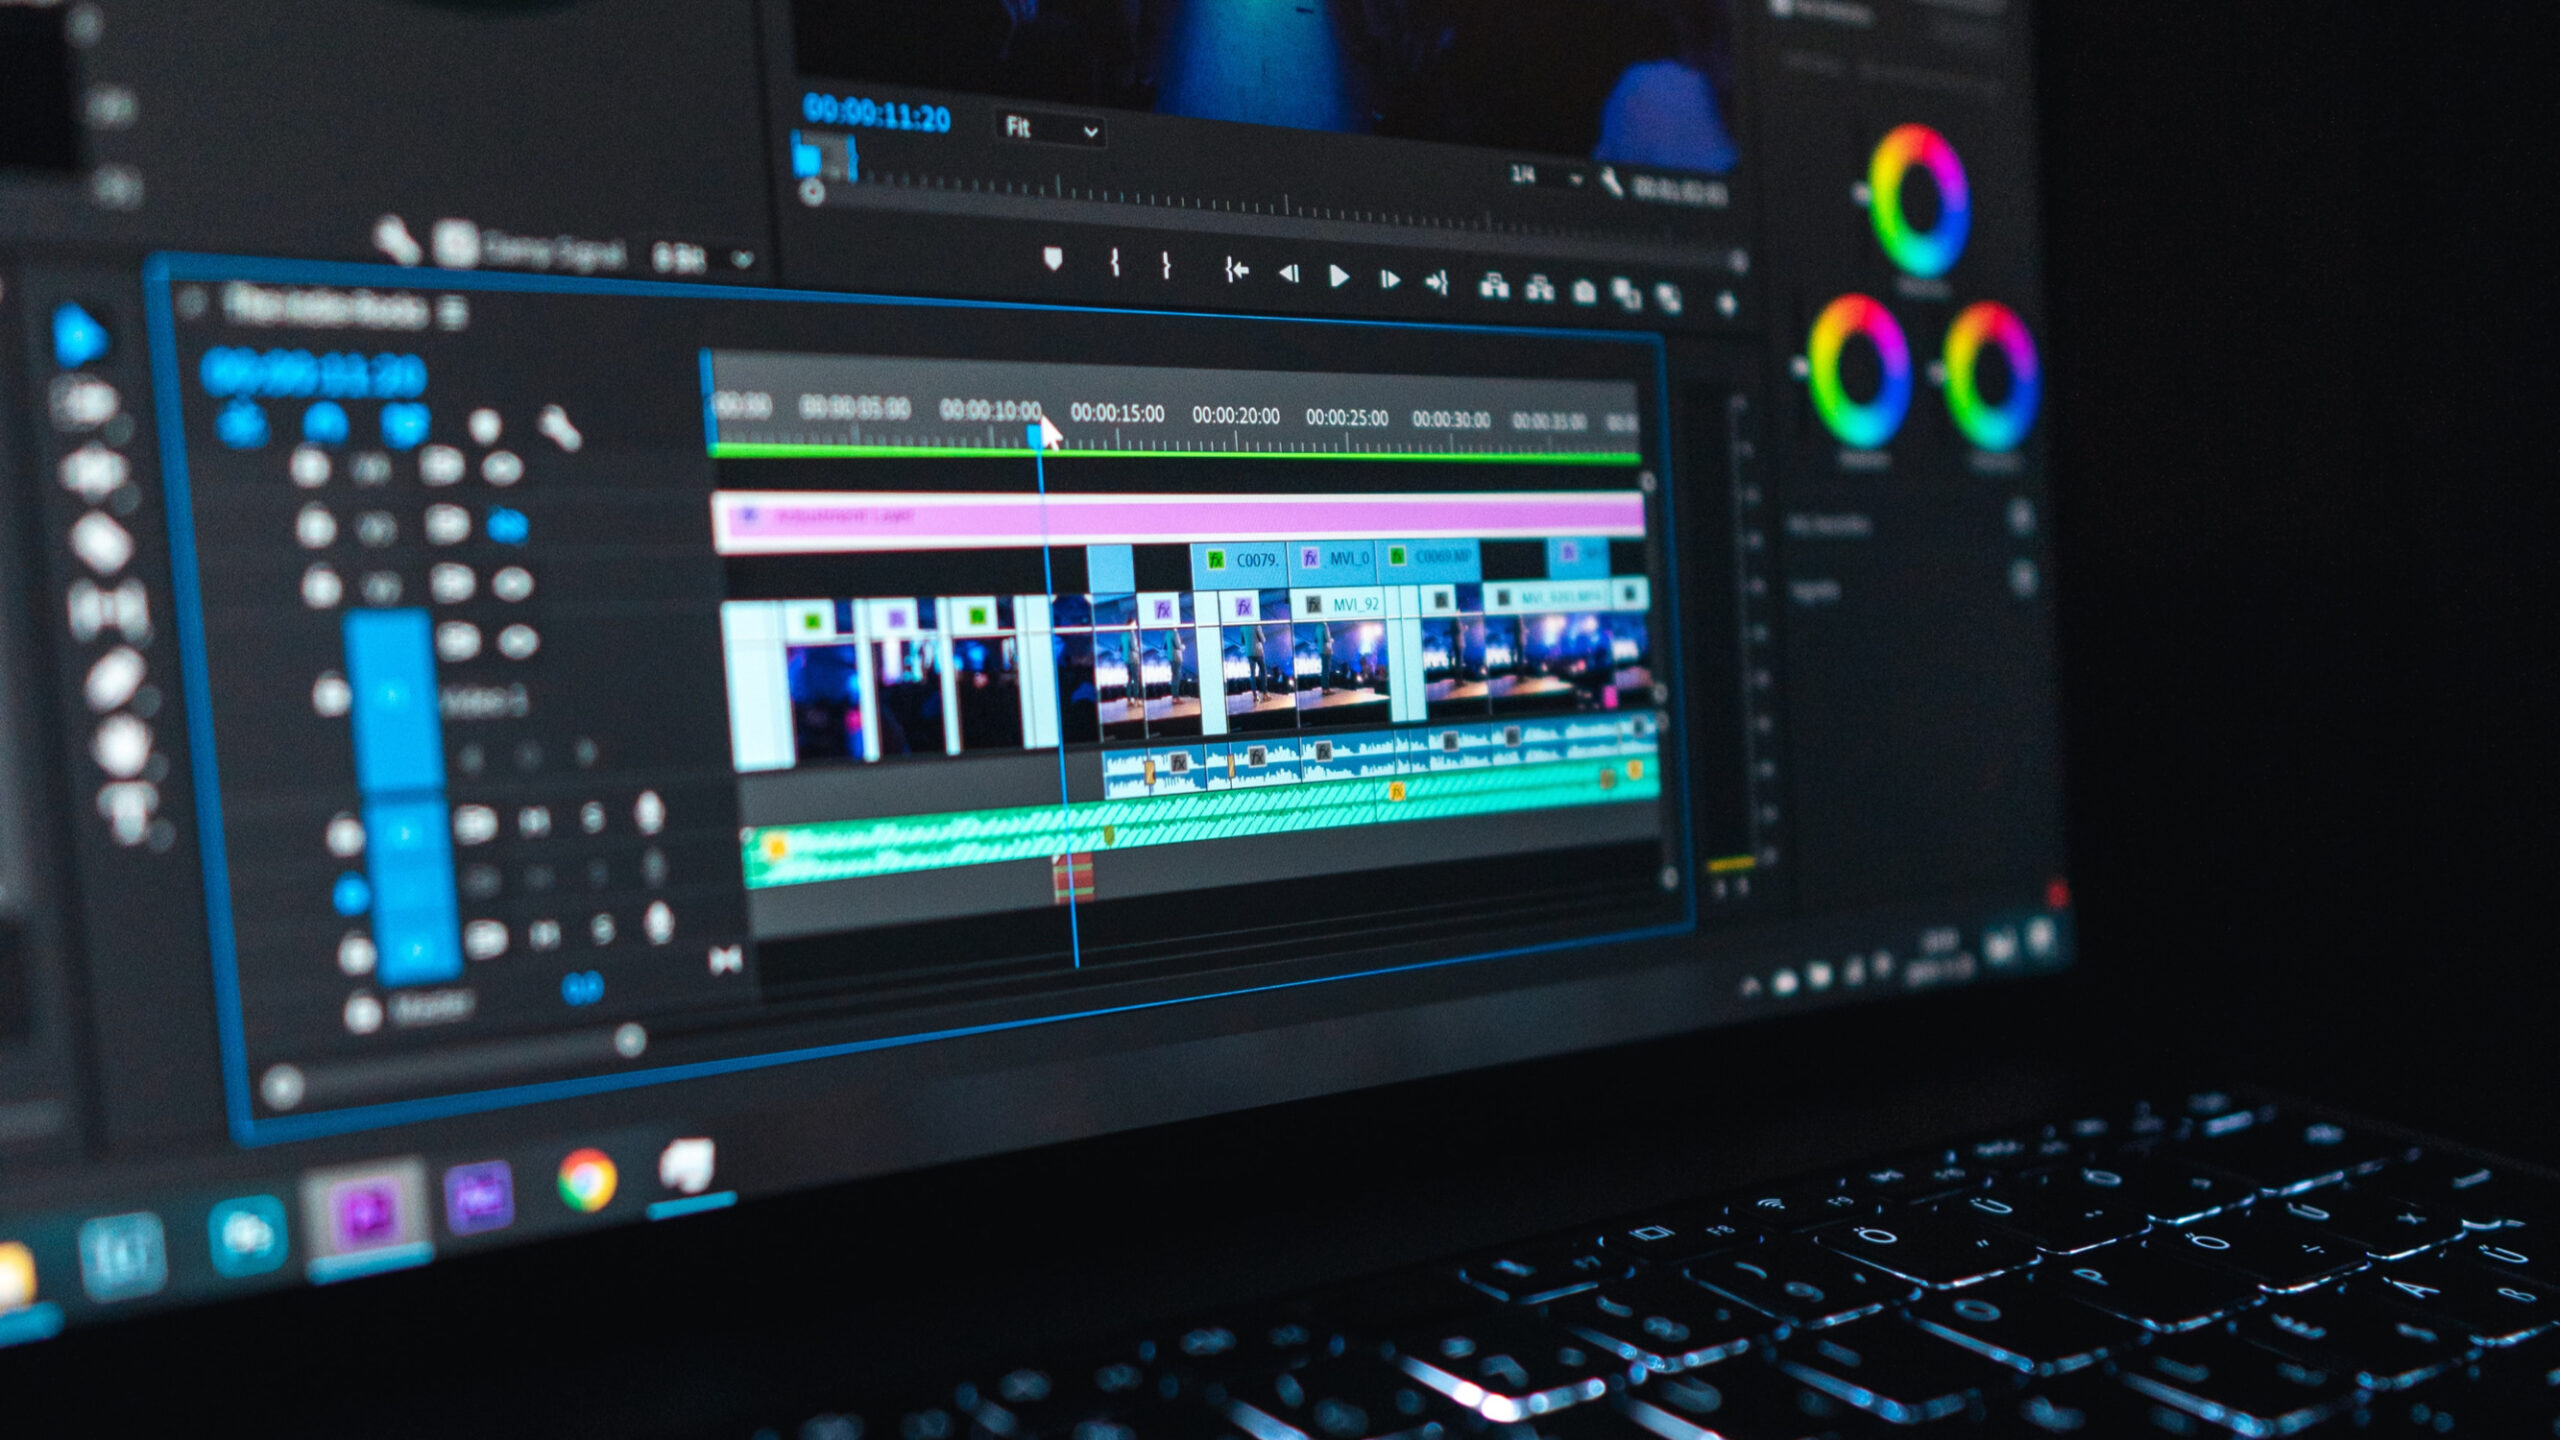 enterprise video editing — remote work